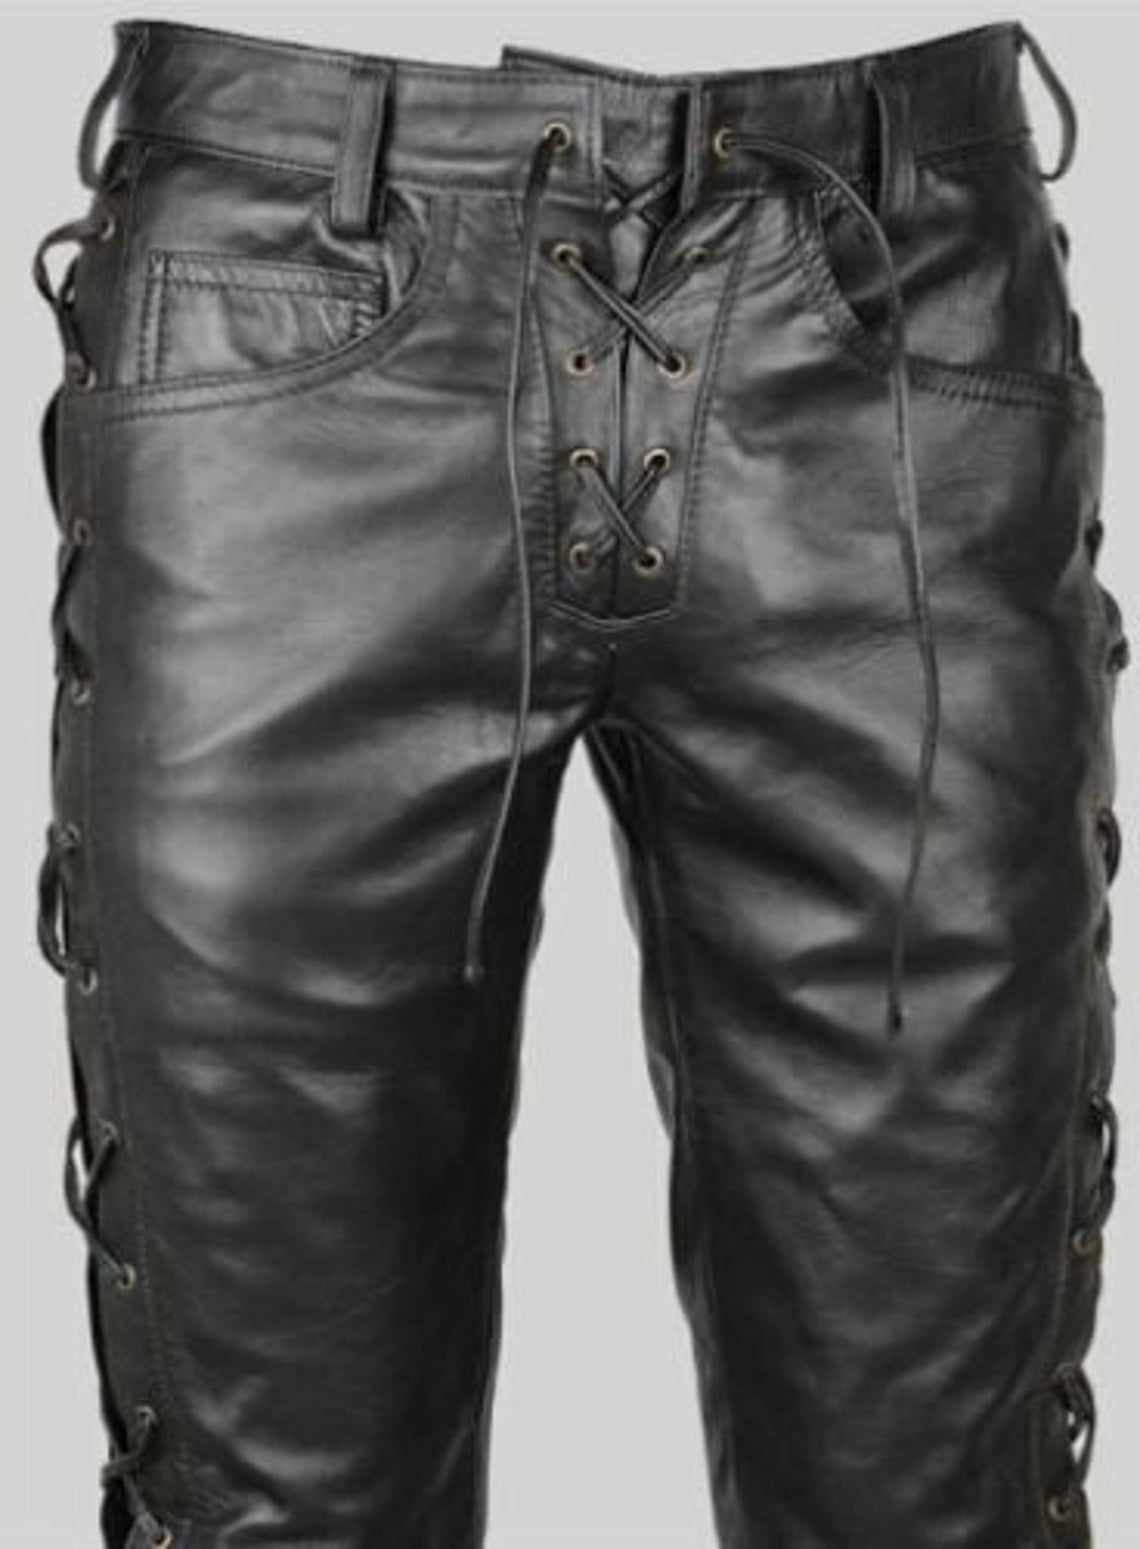 STKOOBQ Wide Leg Legging Womens High Waisted Slim Leather Pants Casual  Stretch Trousers Leather Pants Side Slit Elastic Gather Hem (Black, S) :  Amazon.co.uk: Fashion